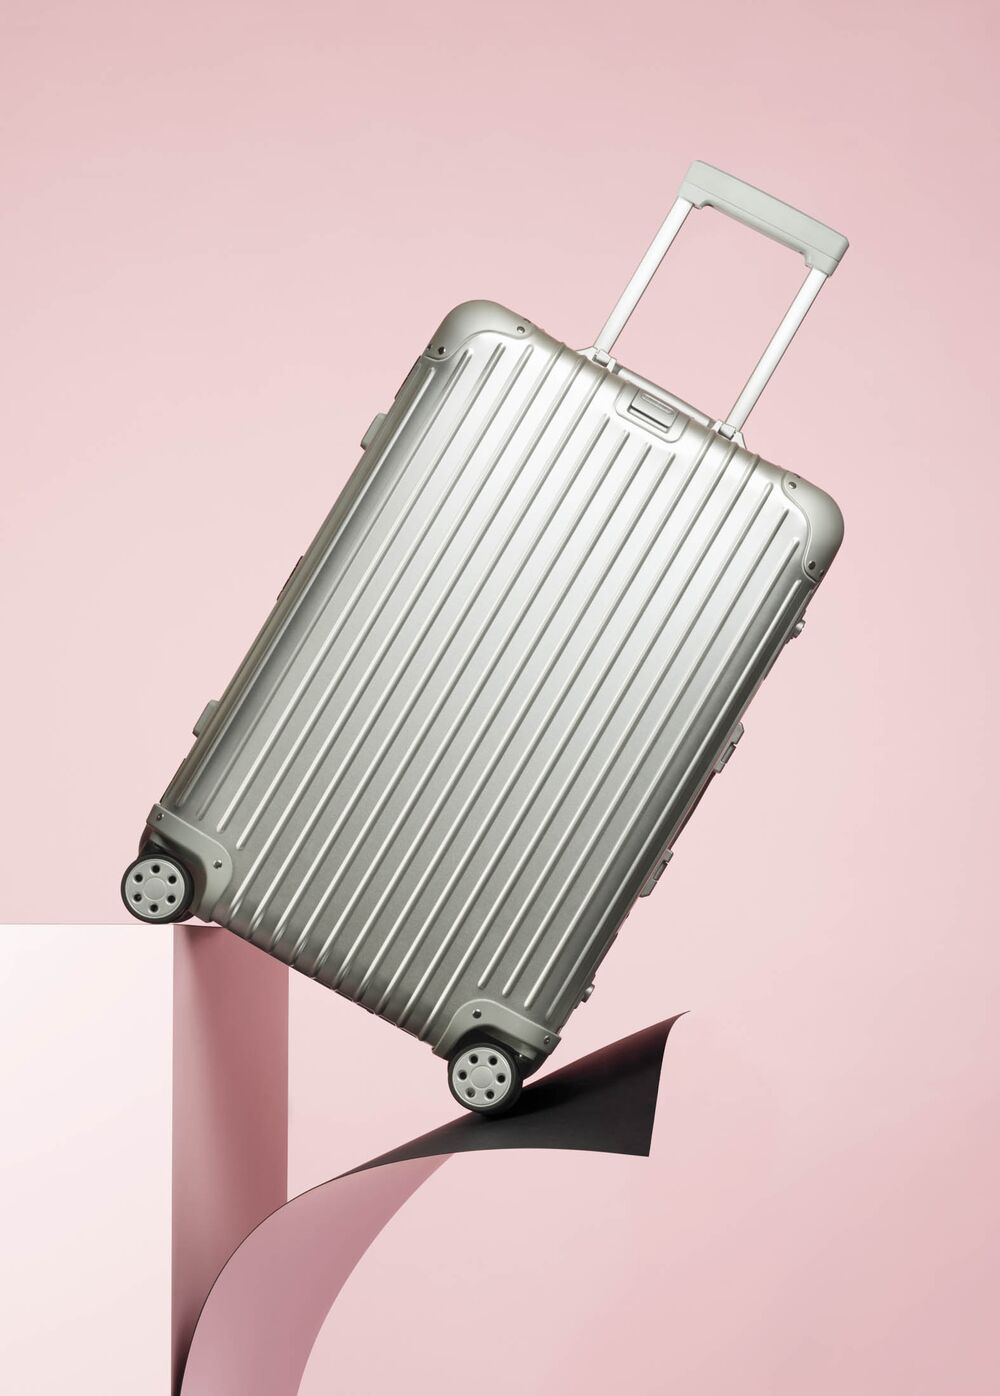 rimowa luggage with electronic tag